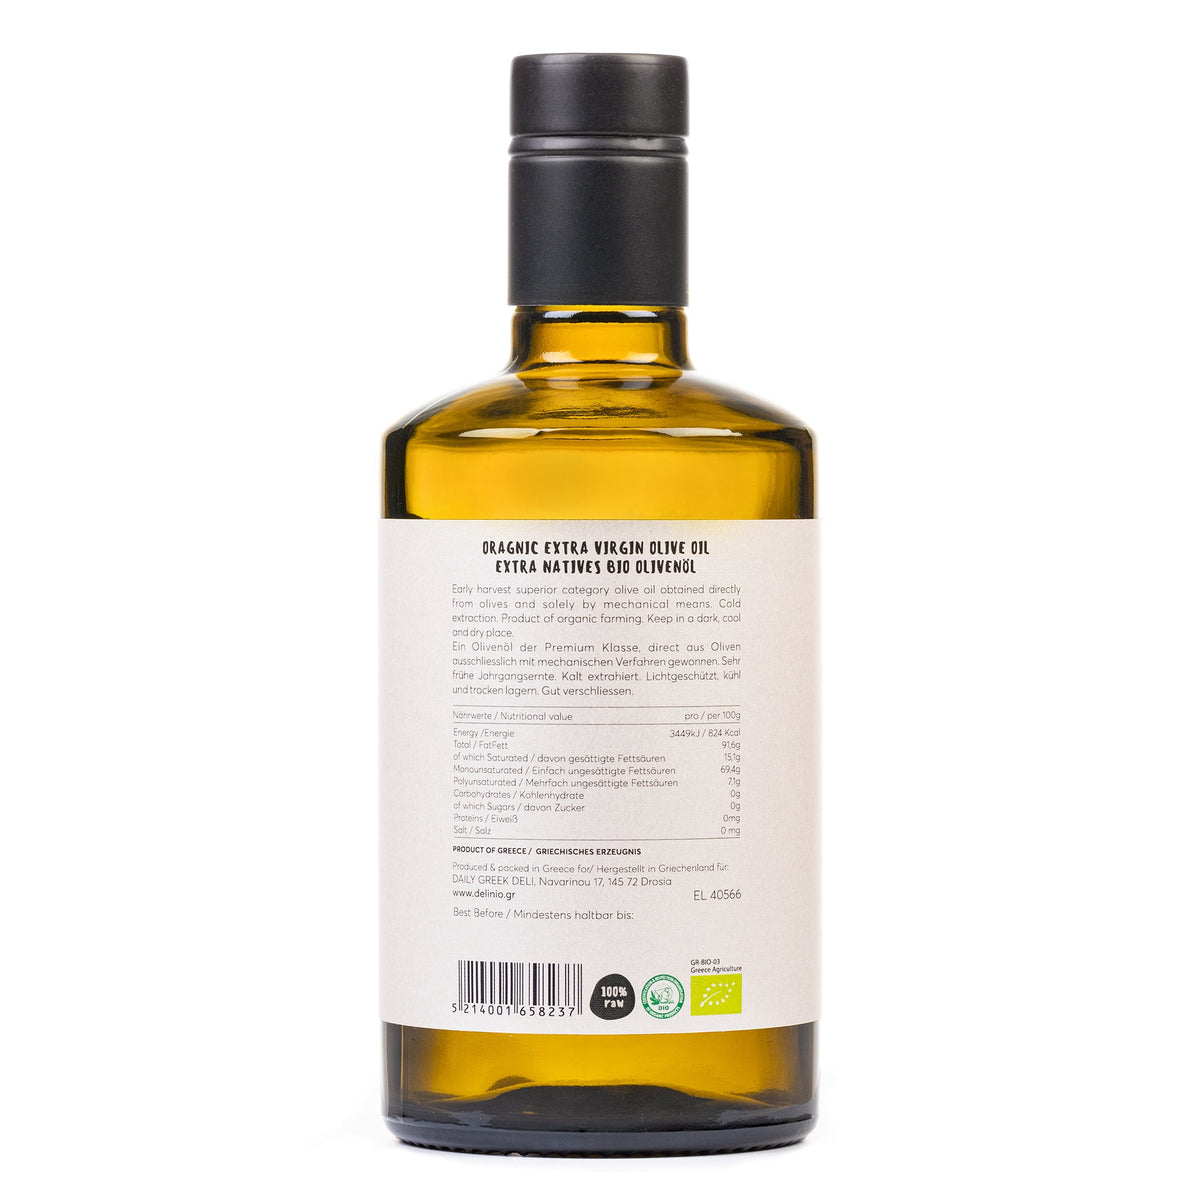 High Polyphenol Premium Bio Olivenöl, 250 ml